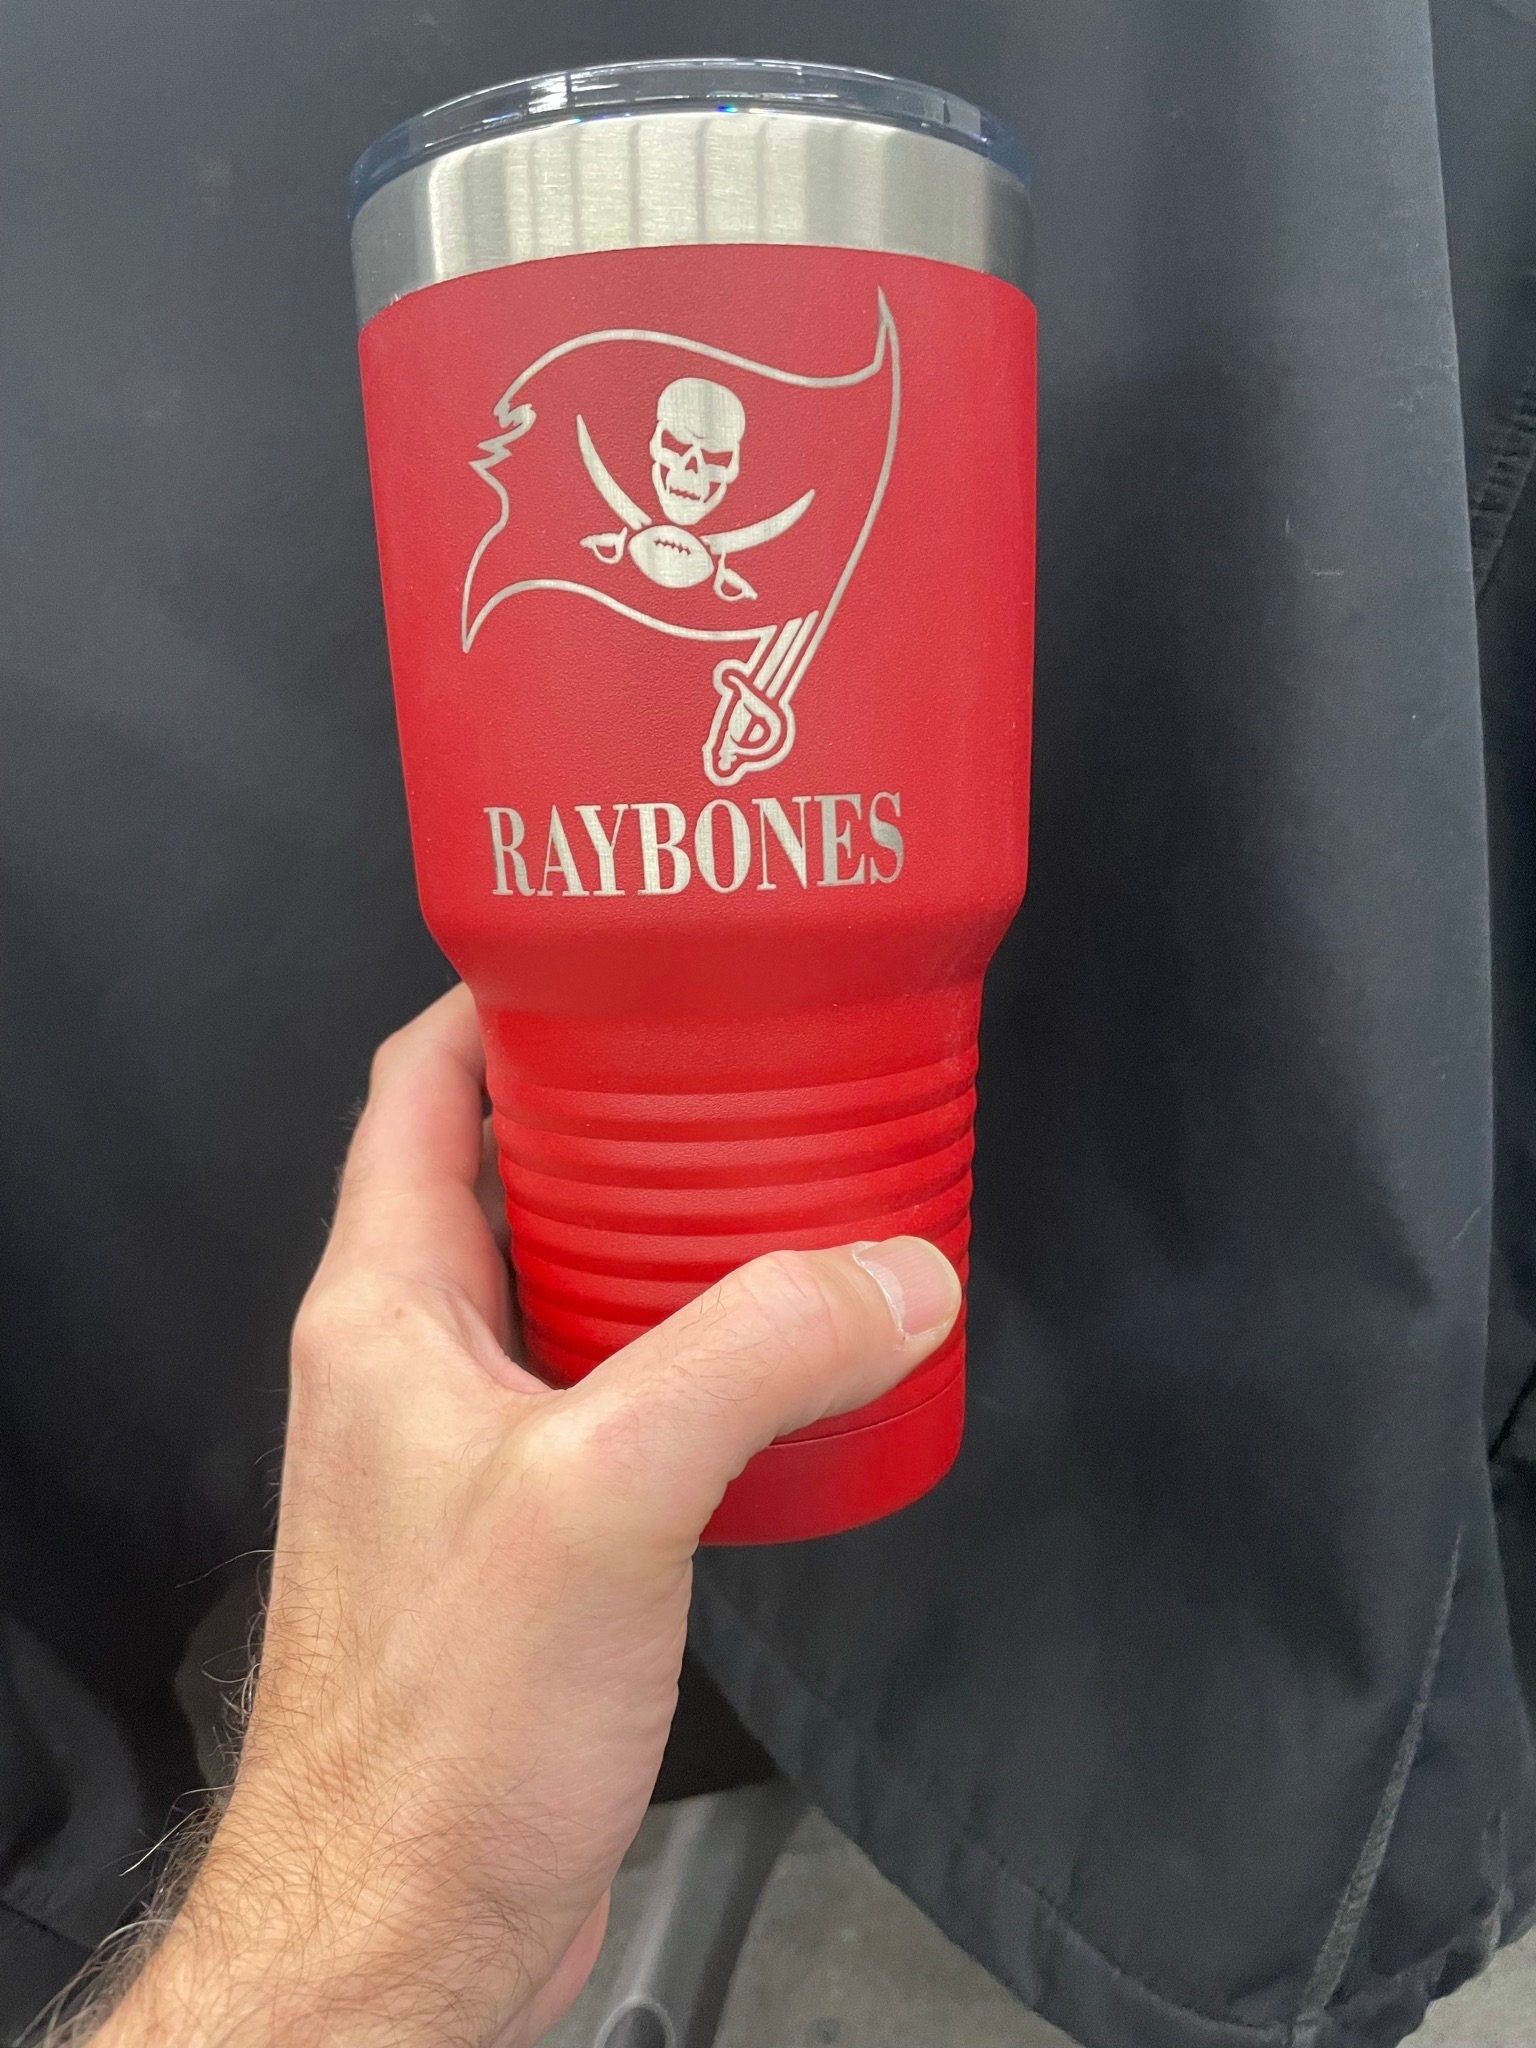 Tampa Bay Buccaneers Super Bowl LV Champions Bistro Mug